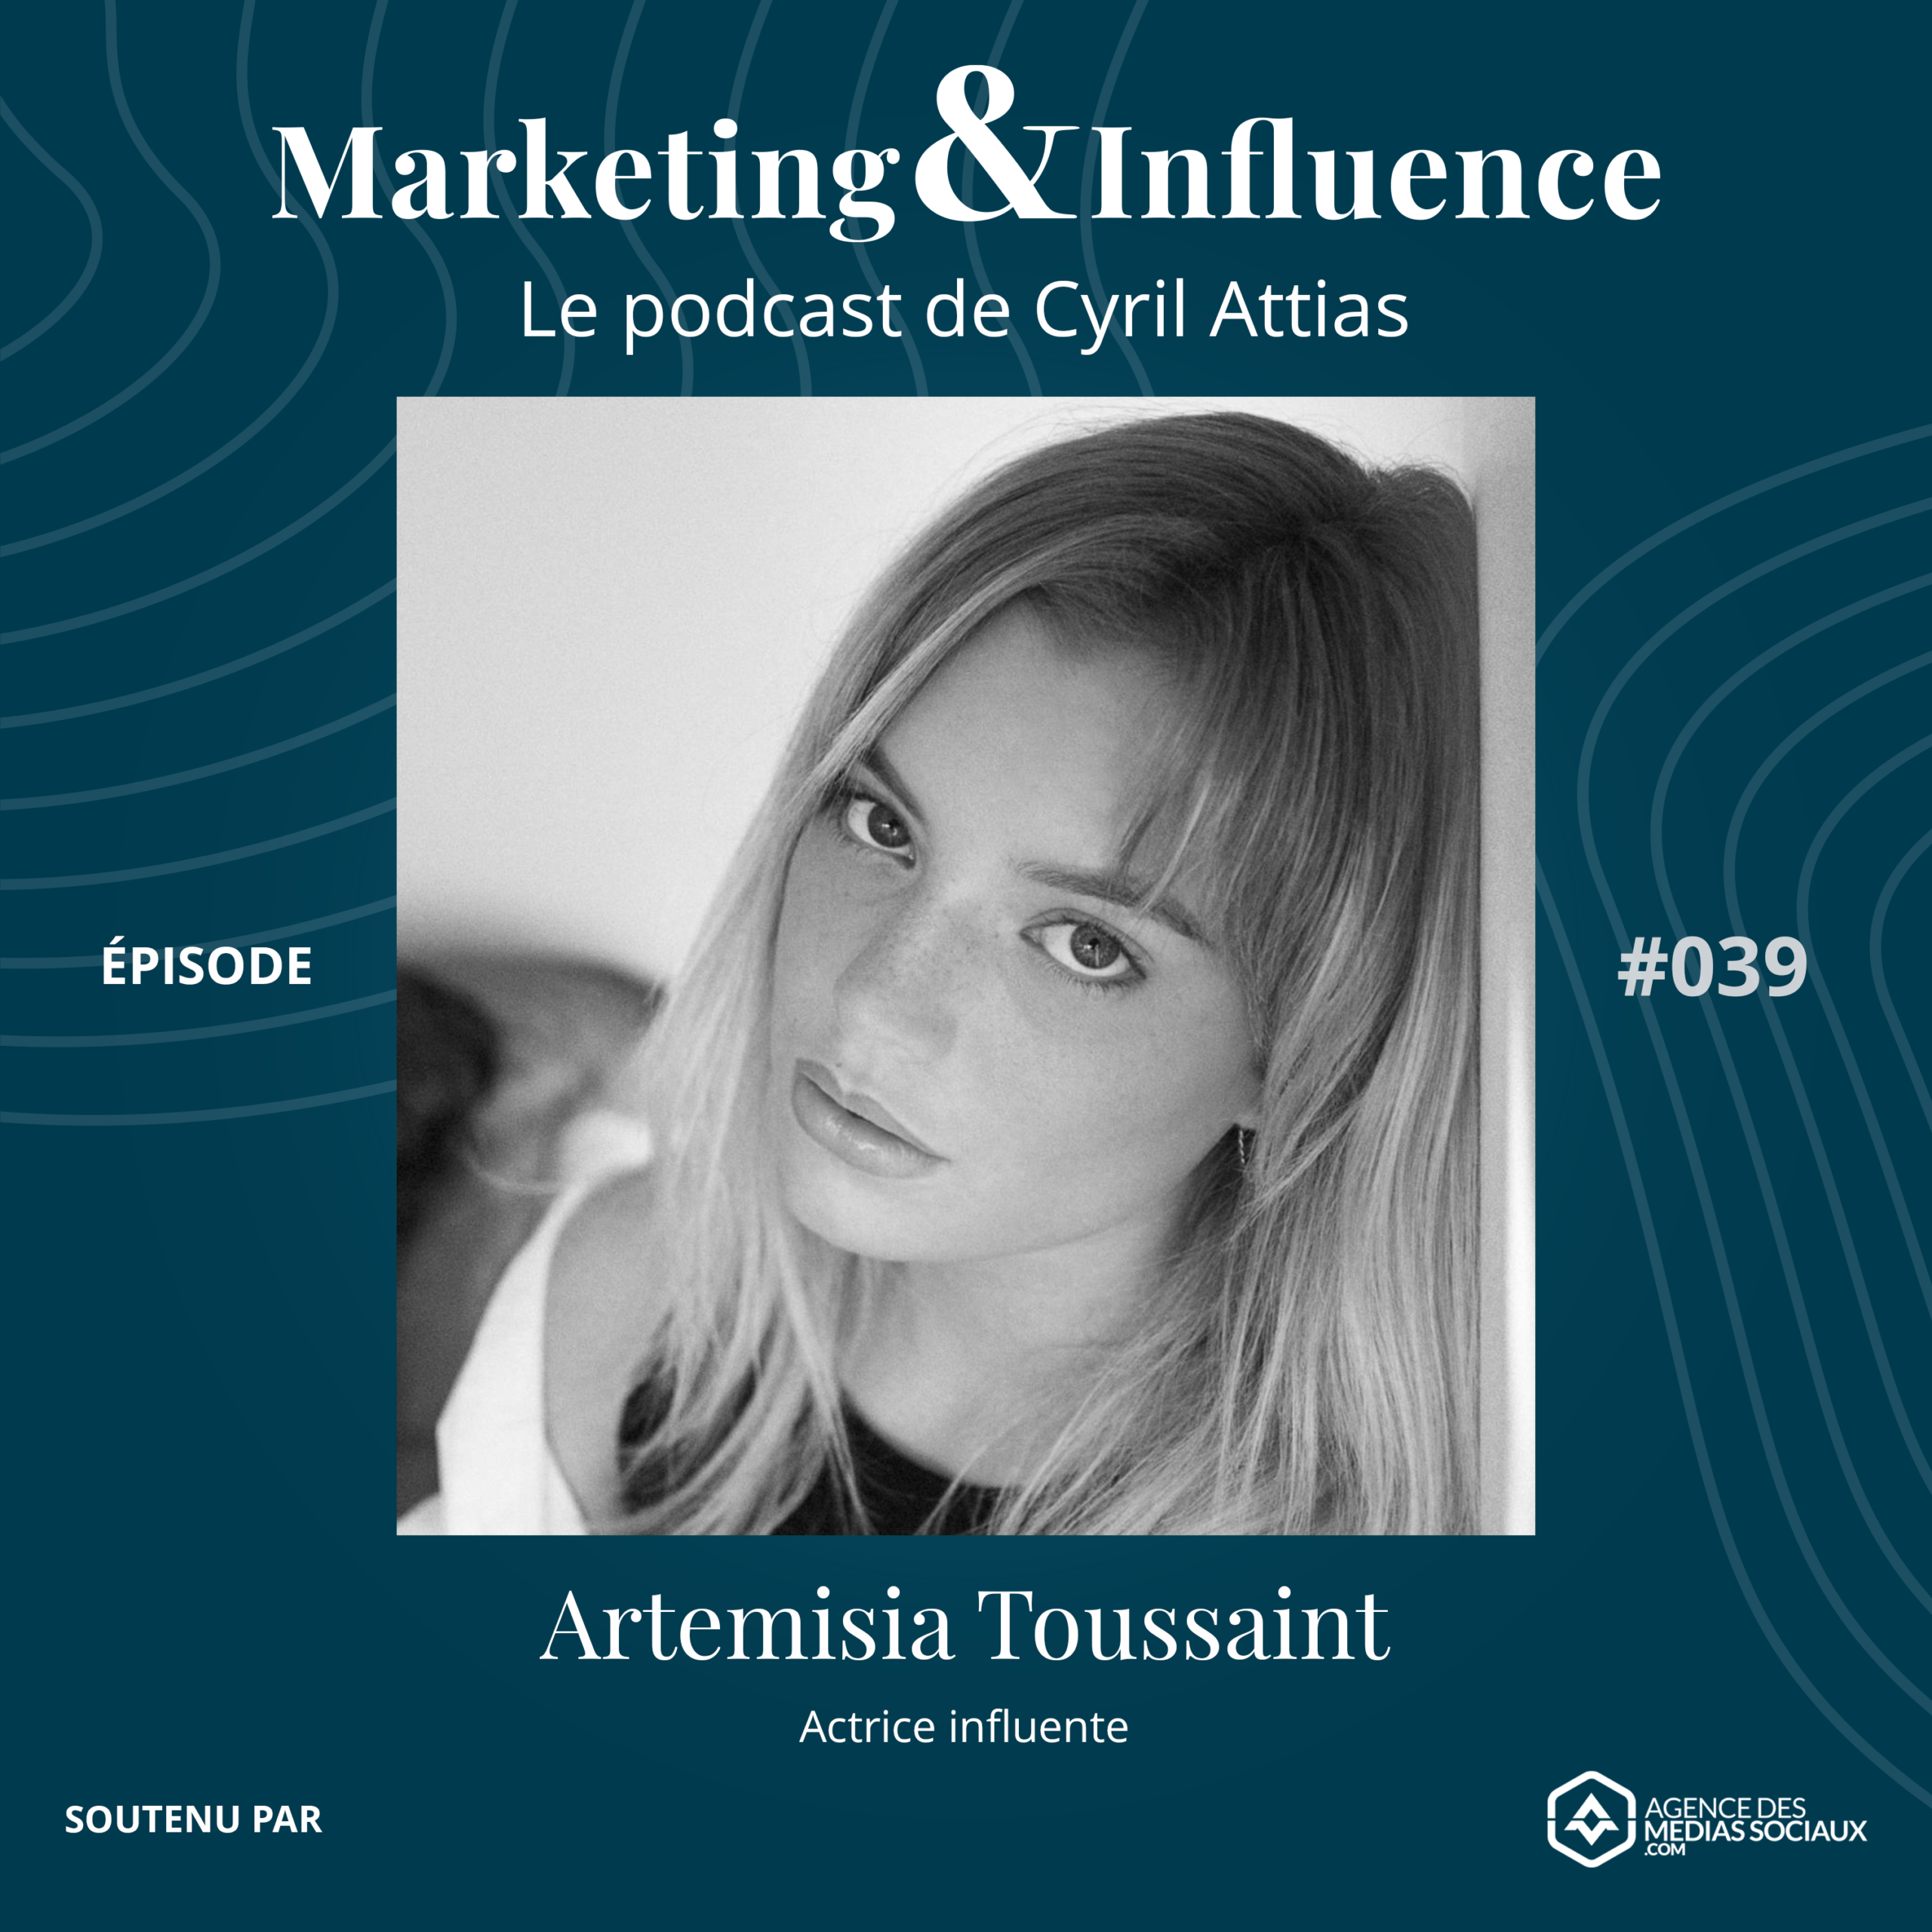 Episode-Artemisia-Toussaint-actrice-influente-Podcast-Cyril-Attias-Marketing-Influence